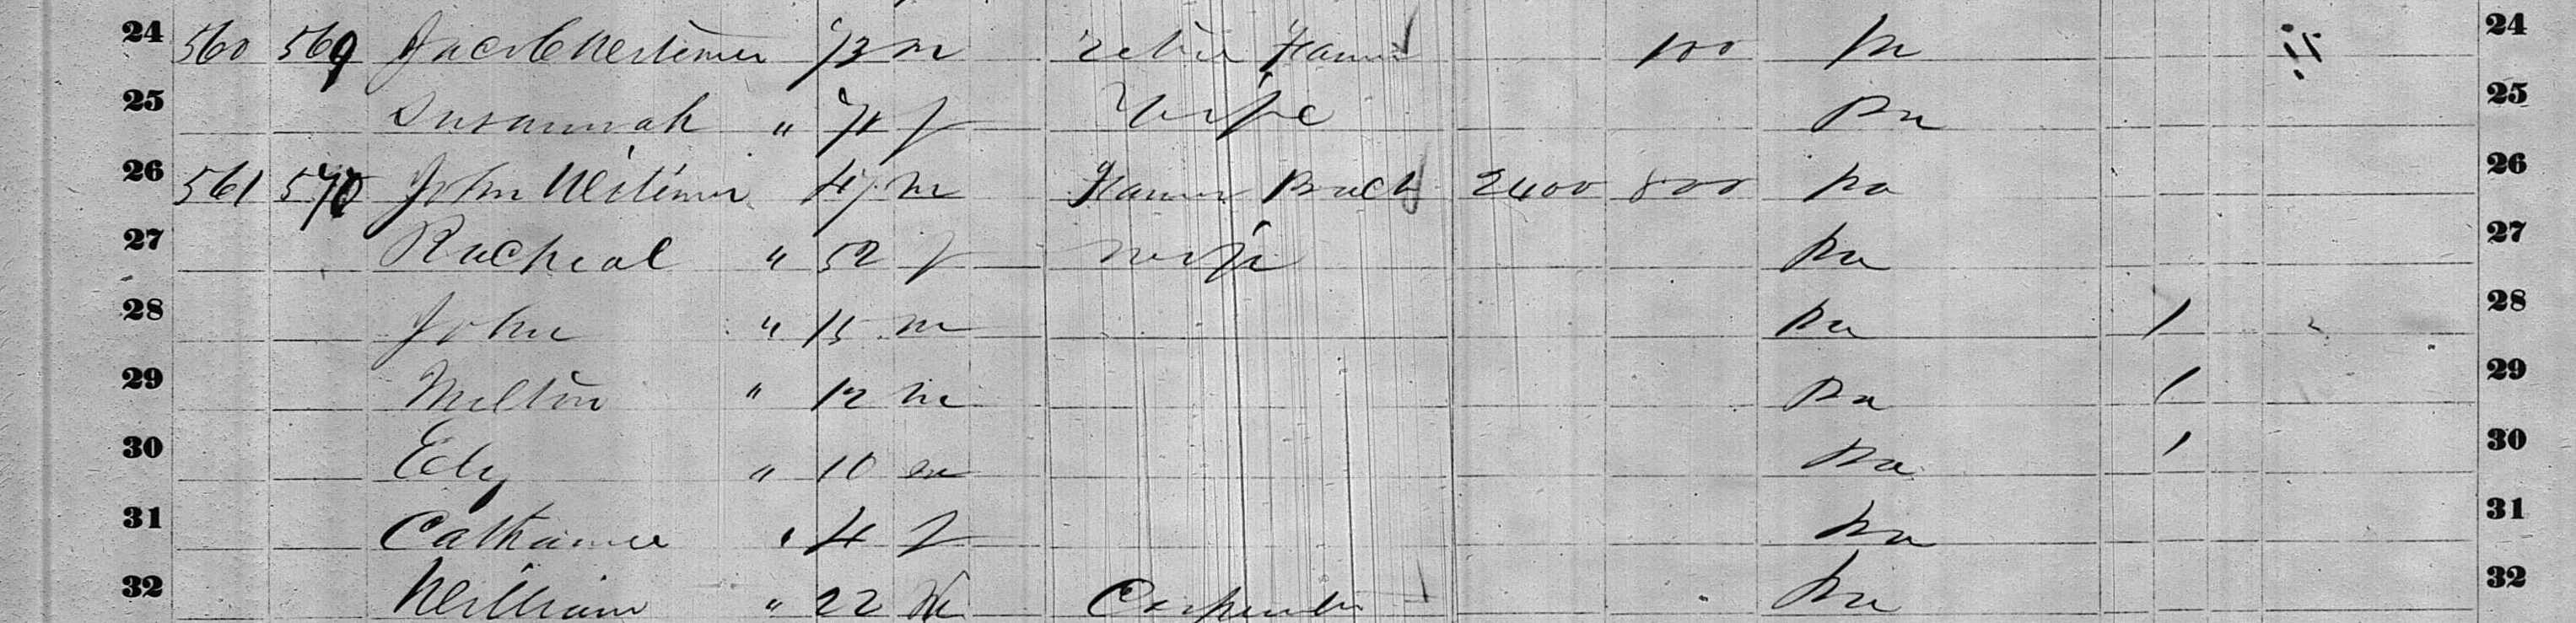 1860 John Witmer census